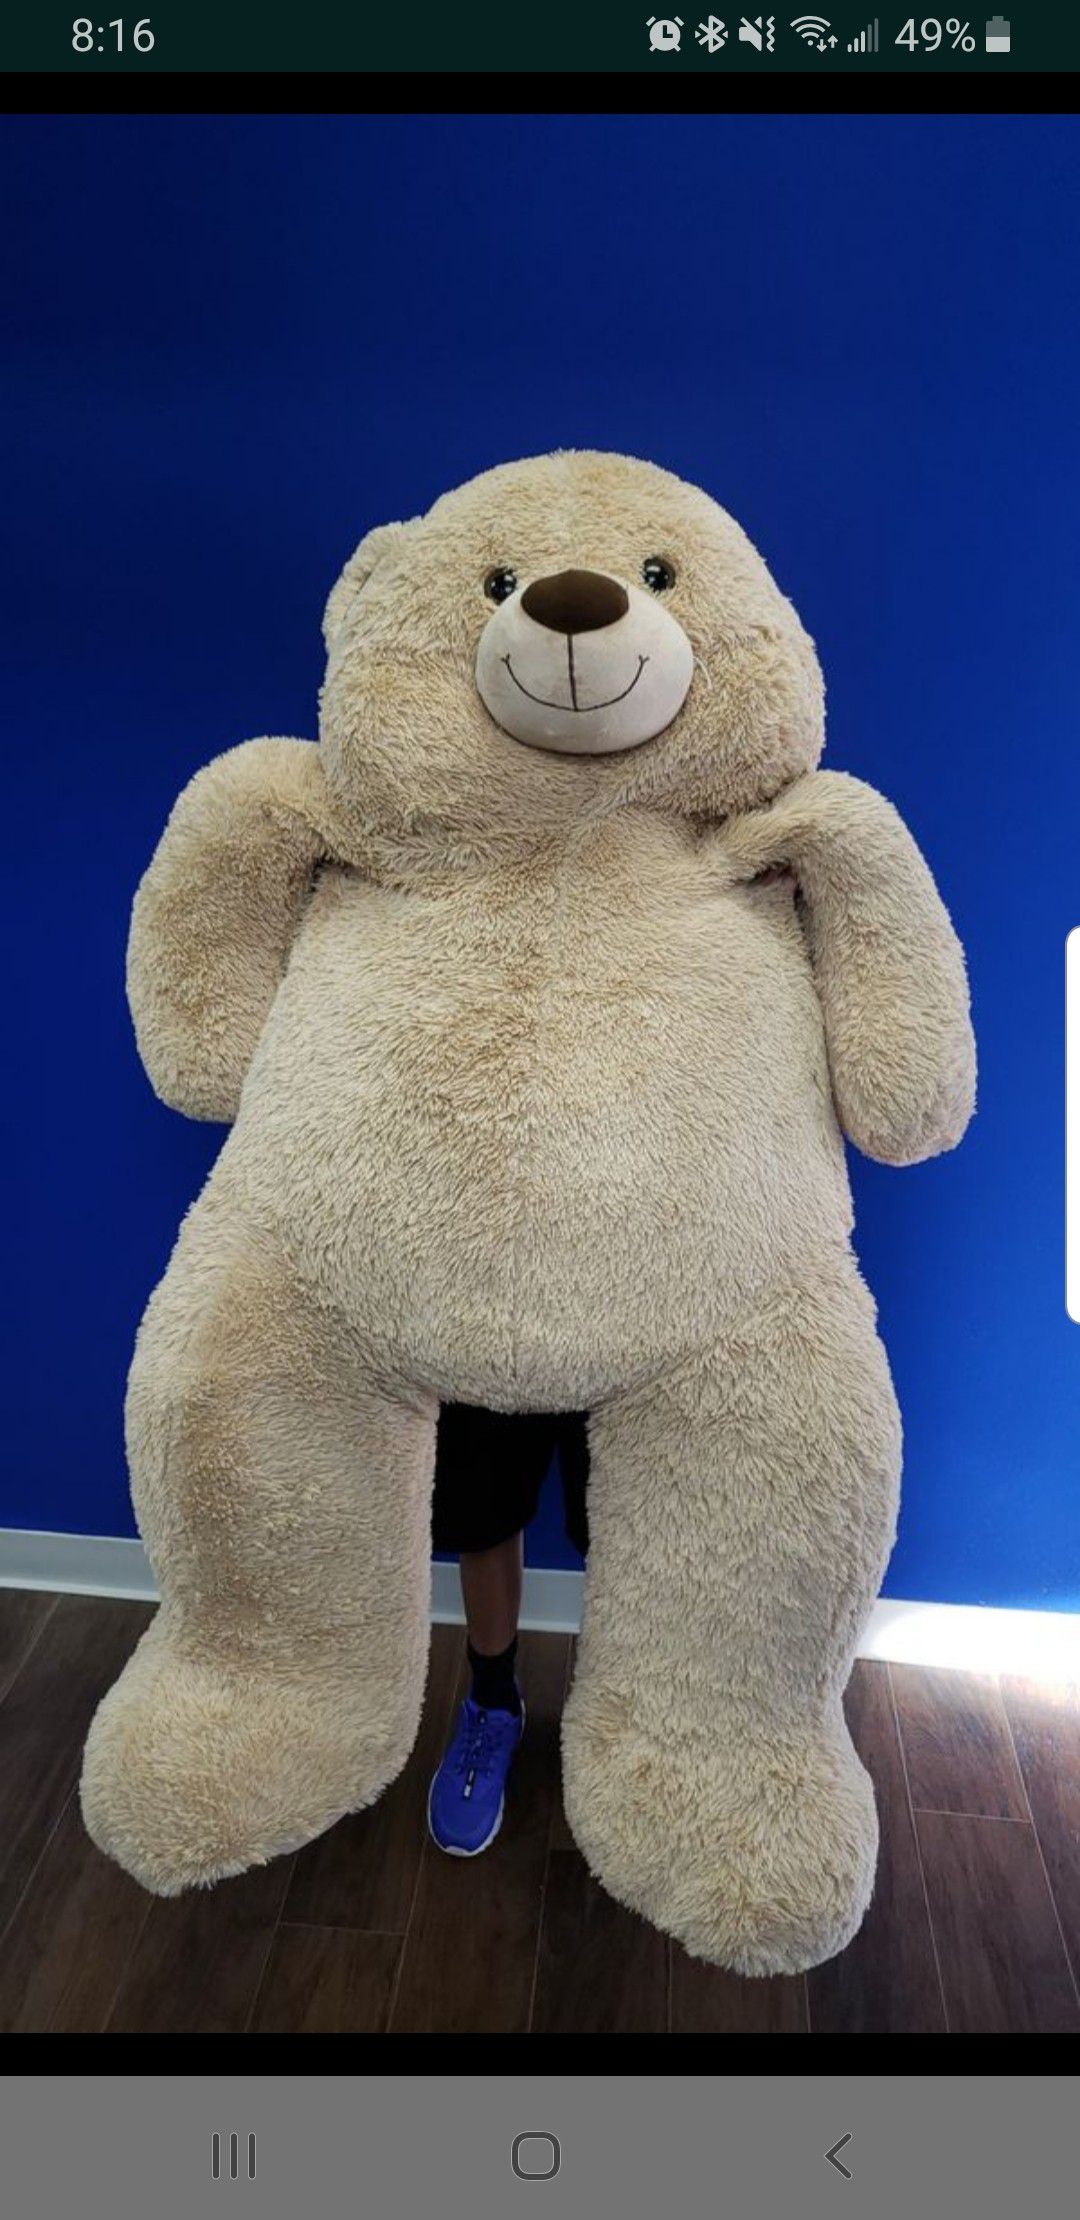 5 foot teddy bear